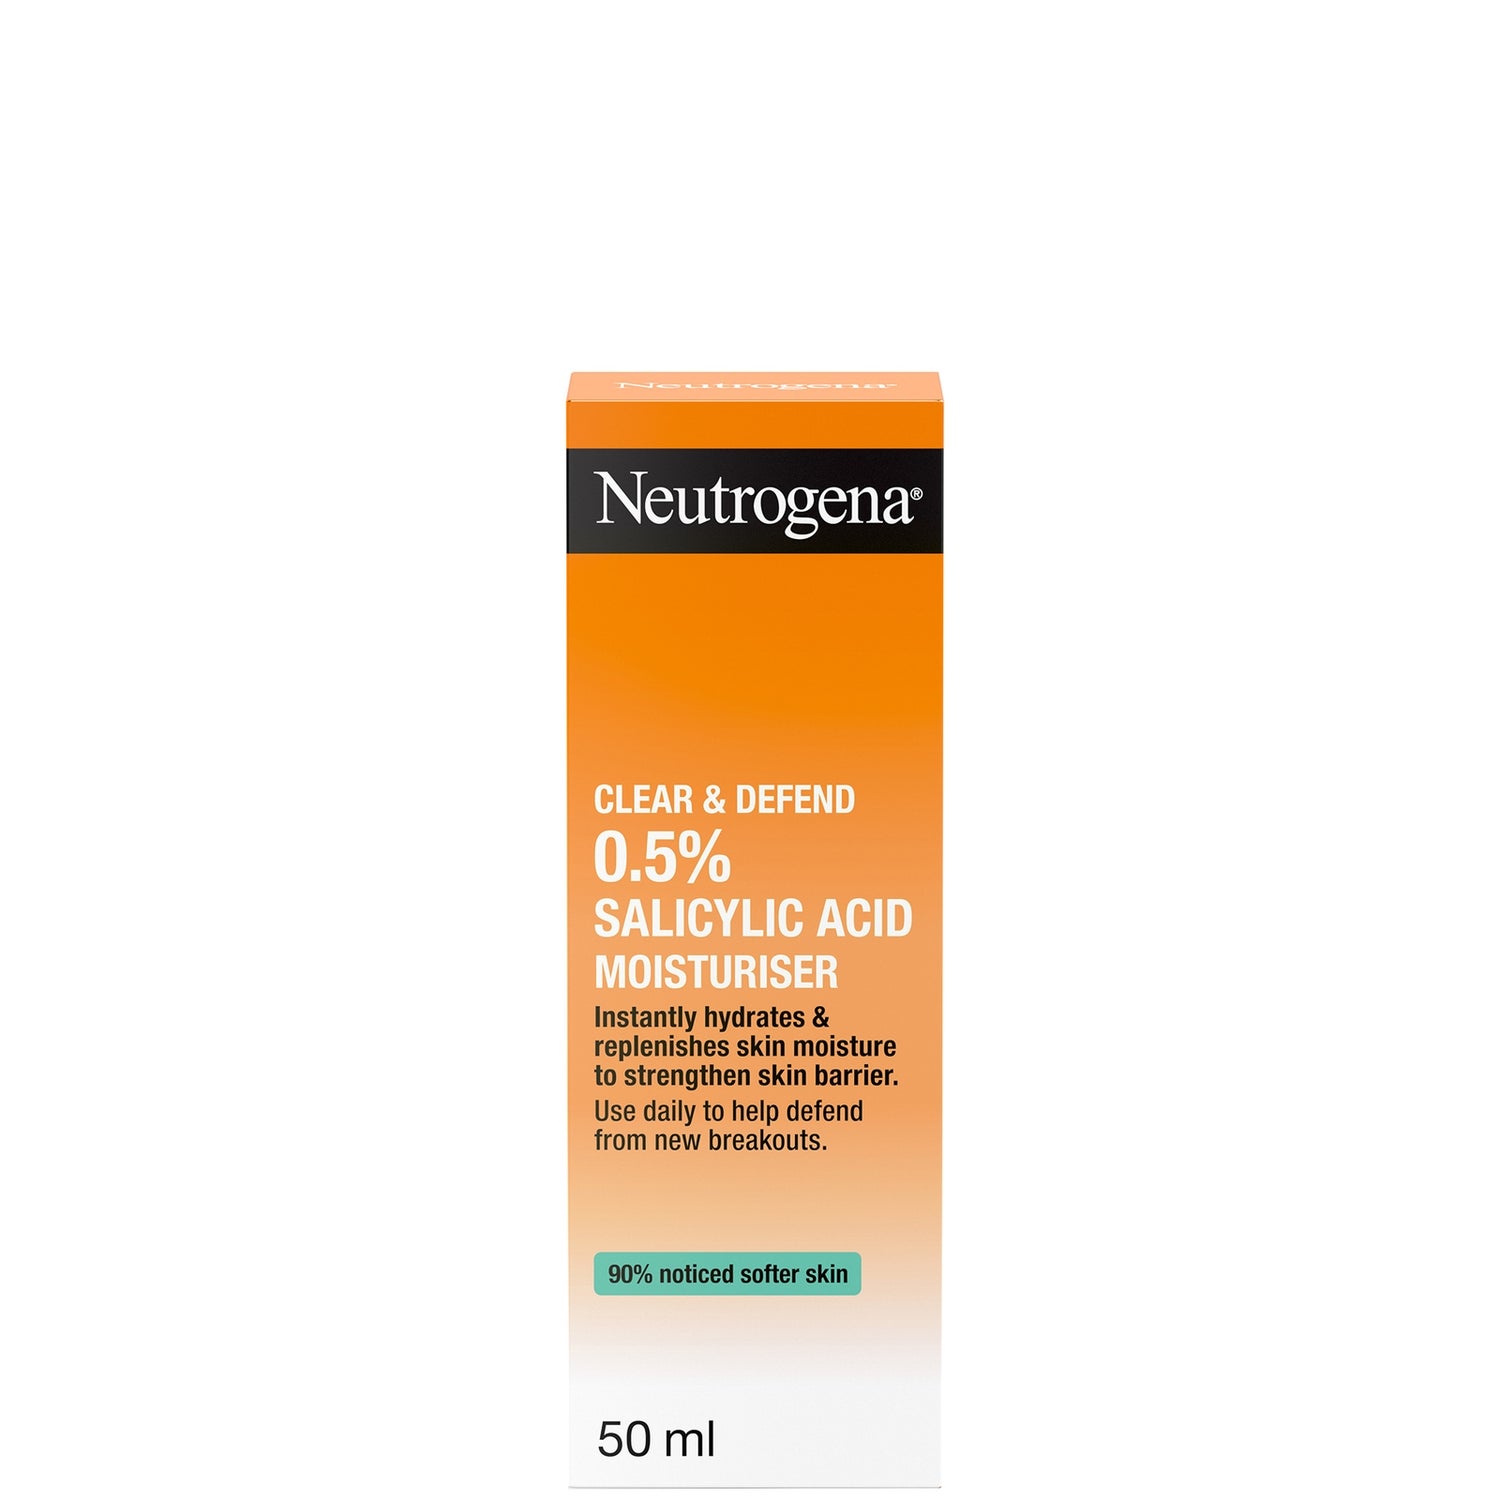 Neutrogena Clear and Defend 0.5% Salicylic Acid Moisturiser 50ml